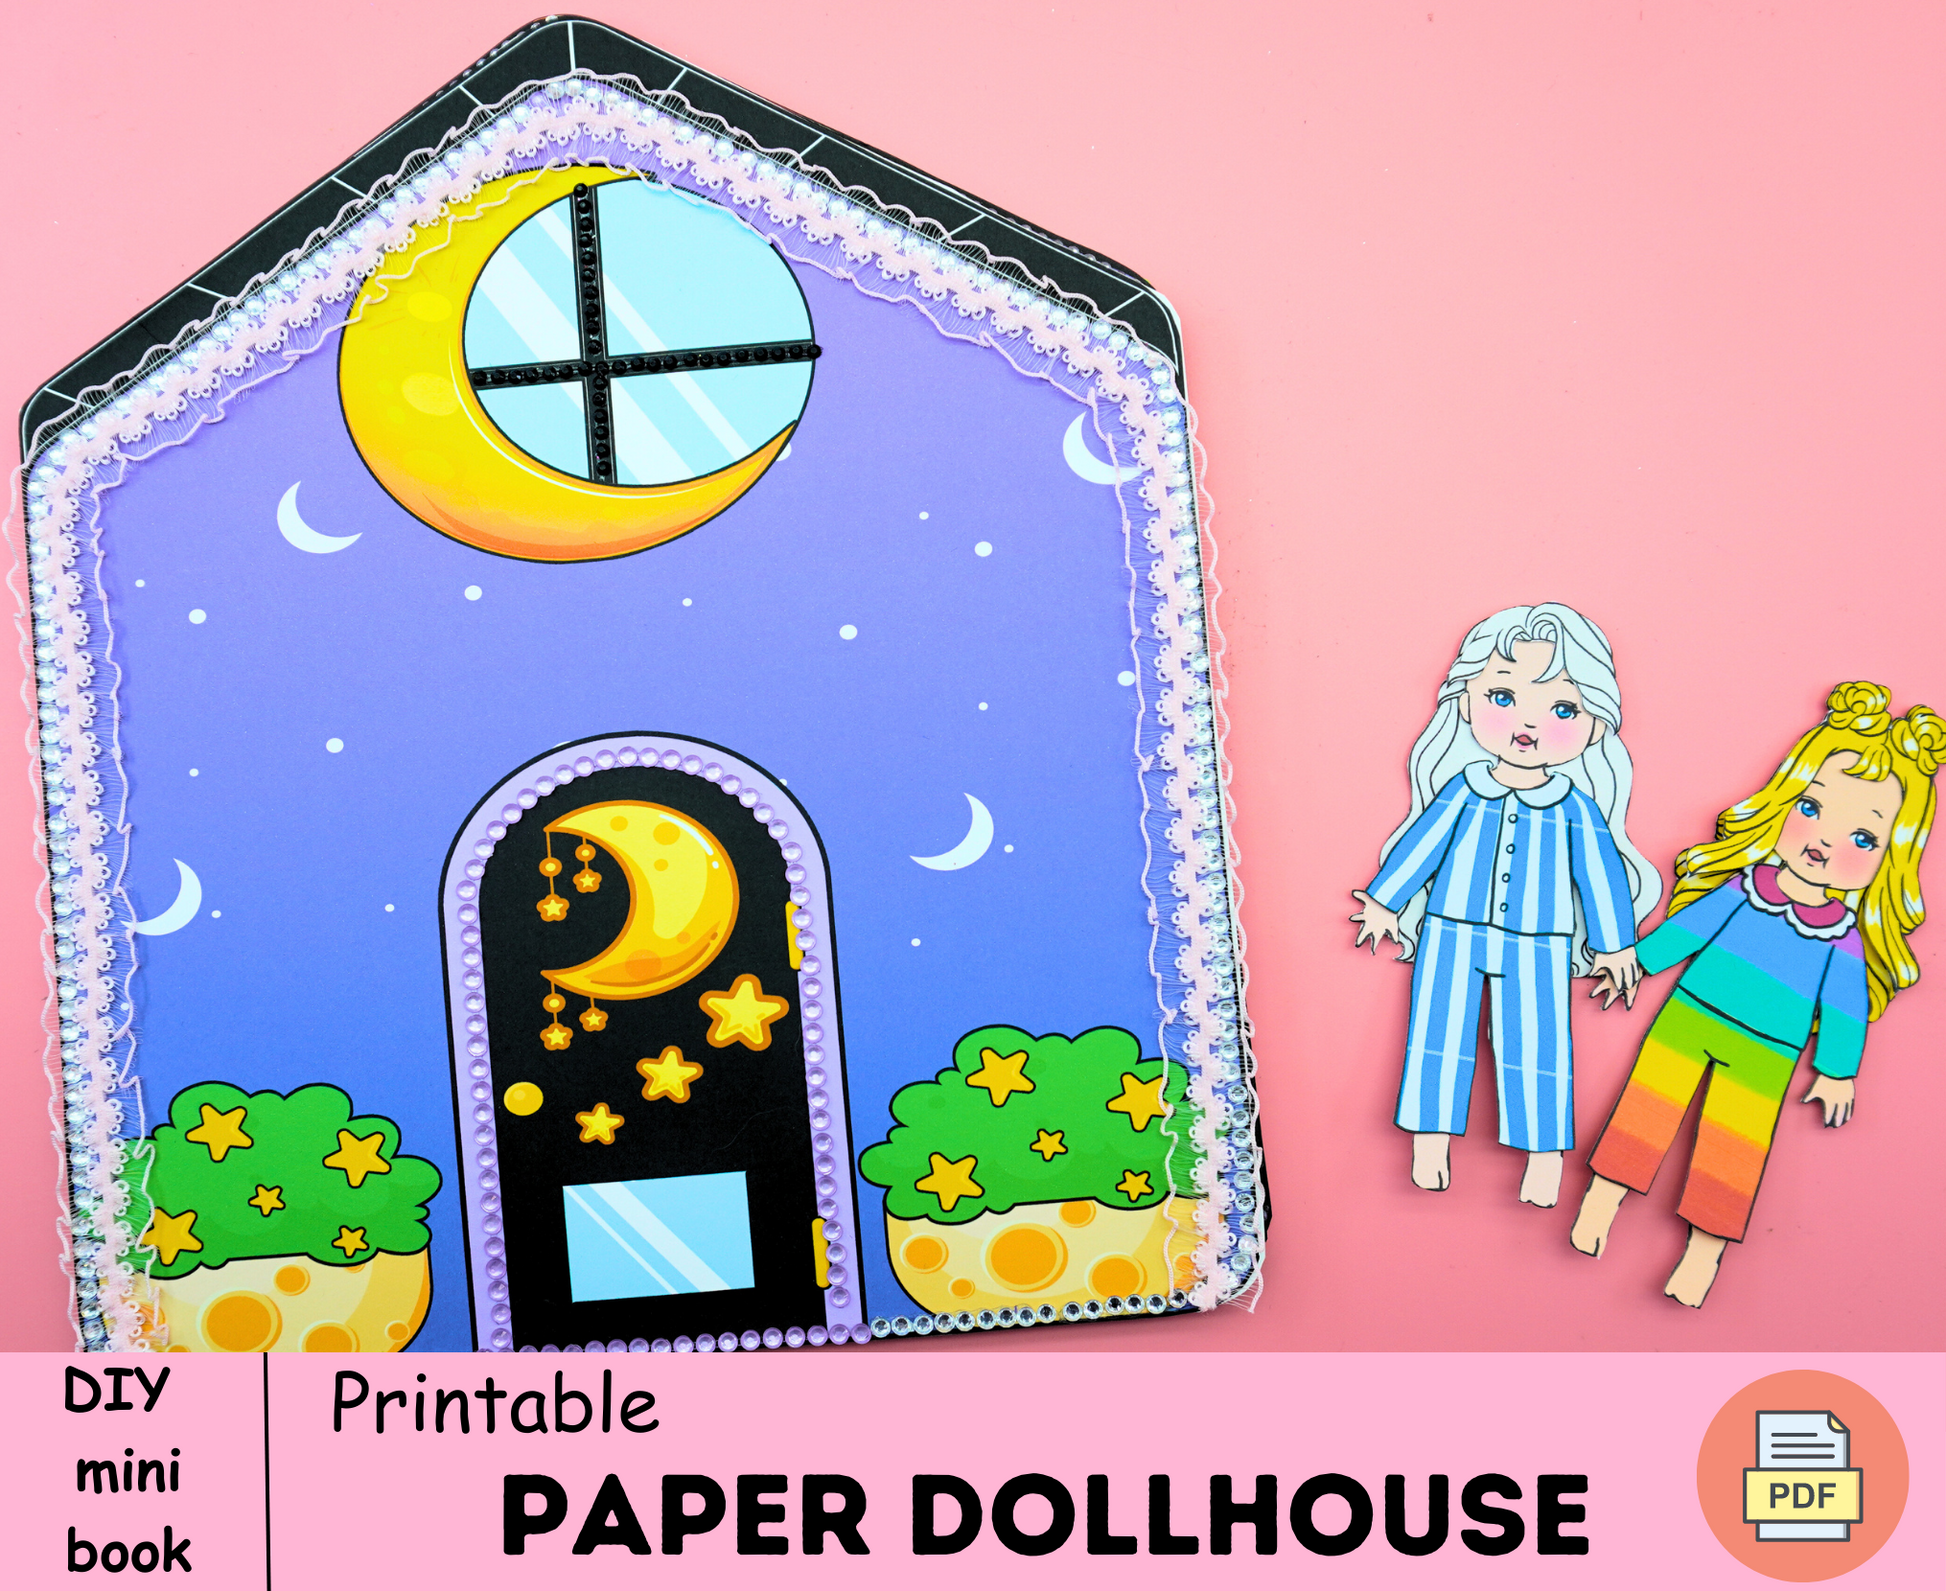 HOW TO MAKE PAPER DOLL Set, DIY TUTORIAL CRAFTS FOR KIDS